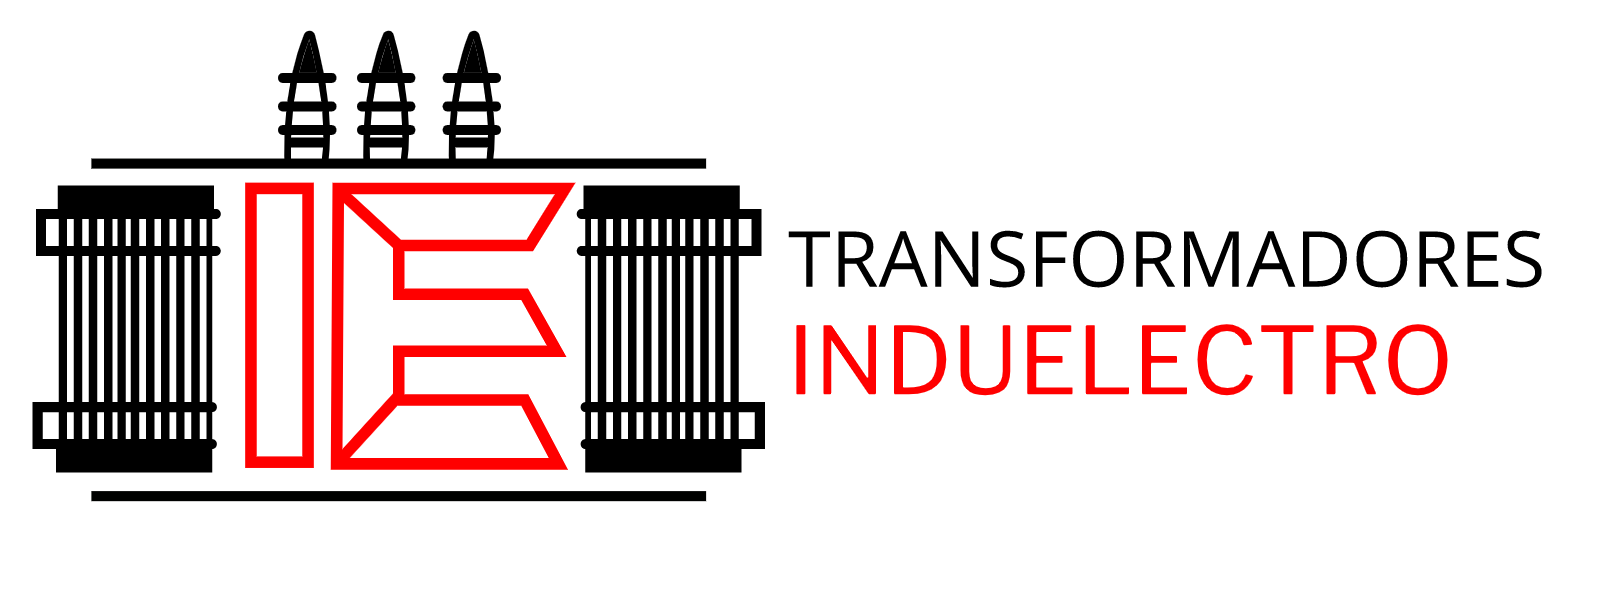 Logo Image transformaores Induelectro